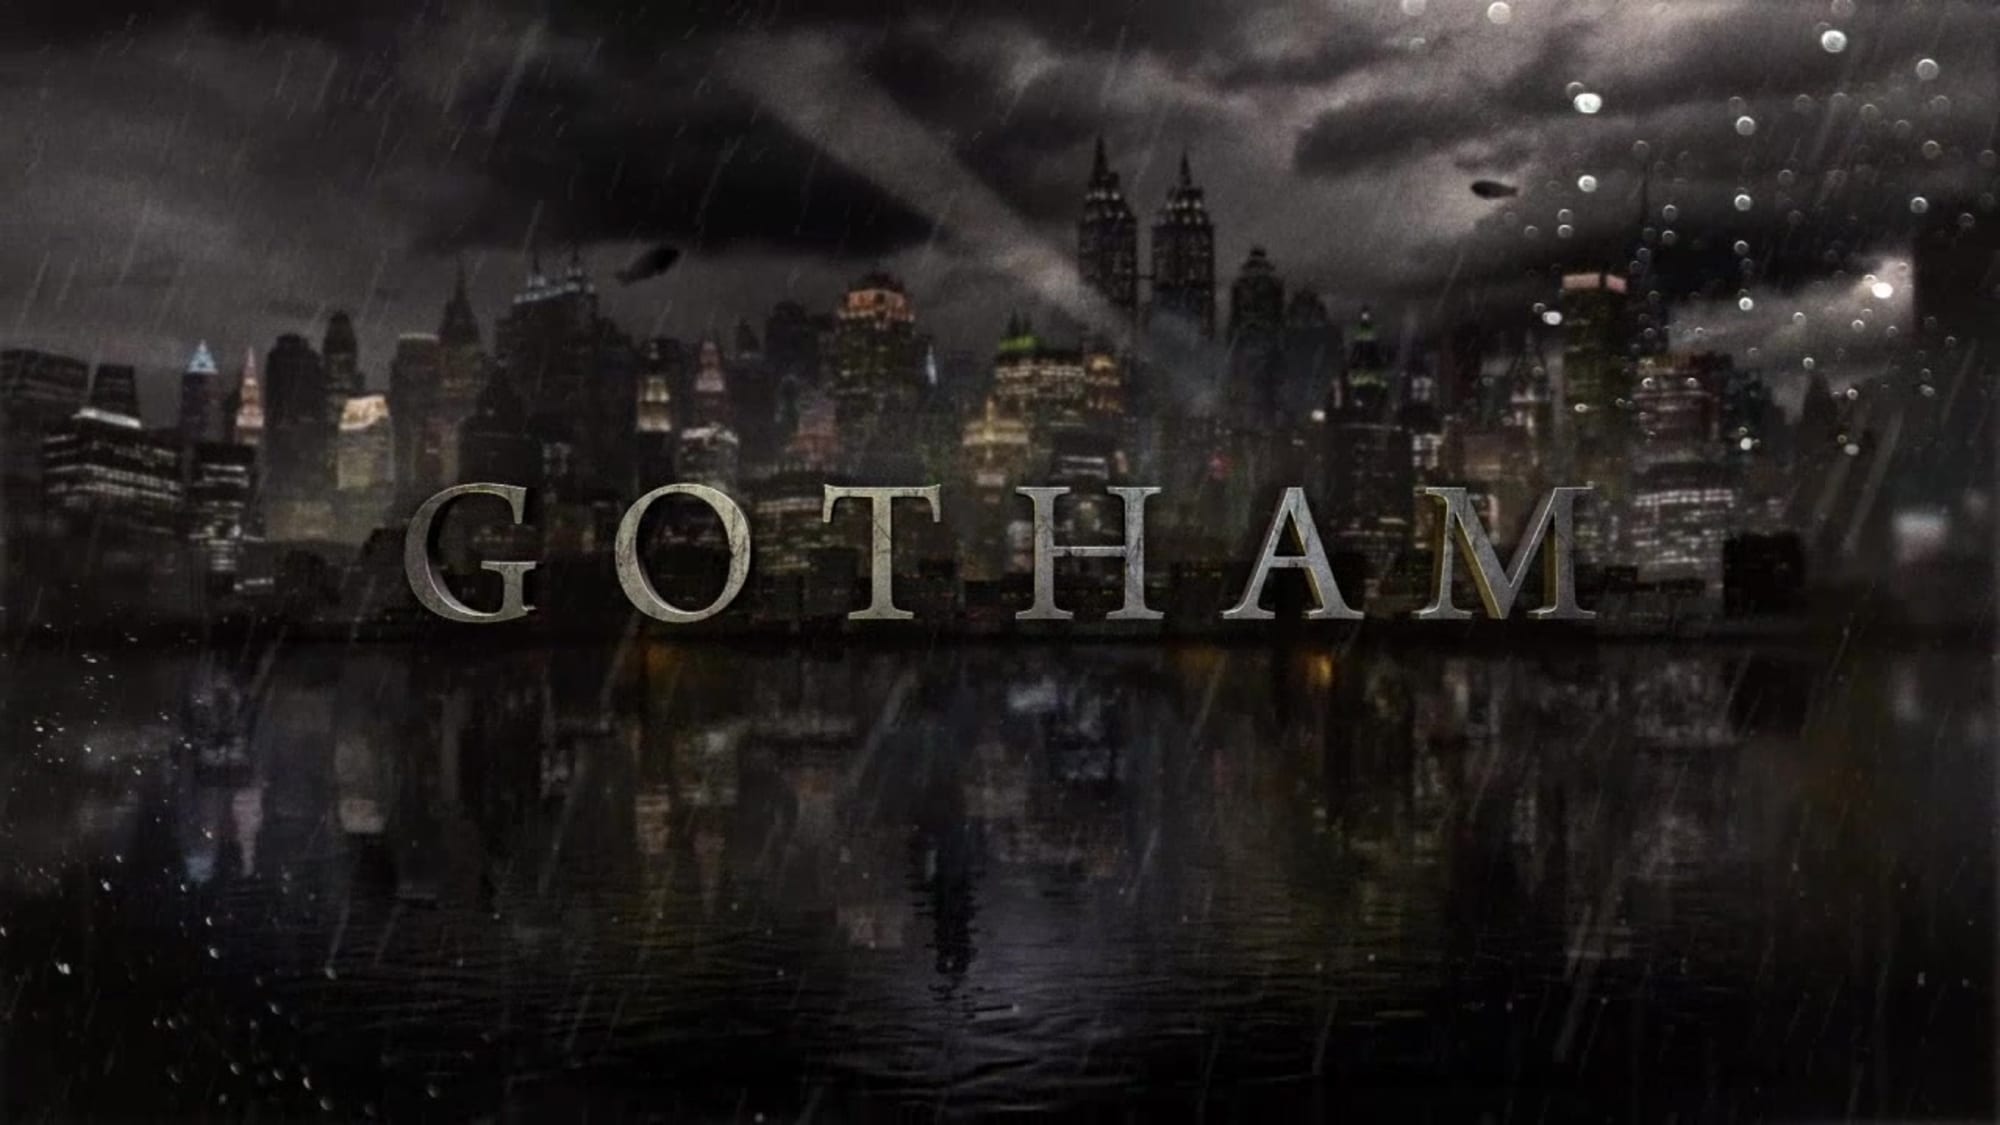 When does Gotham return?